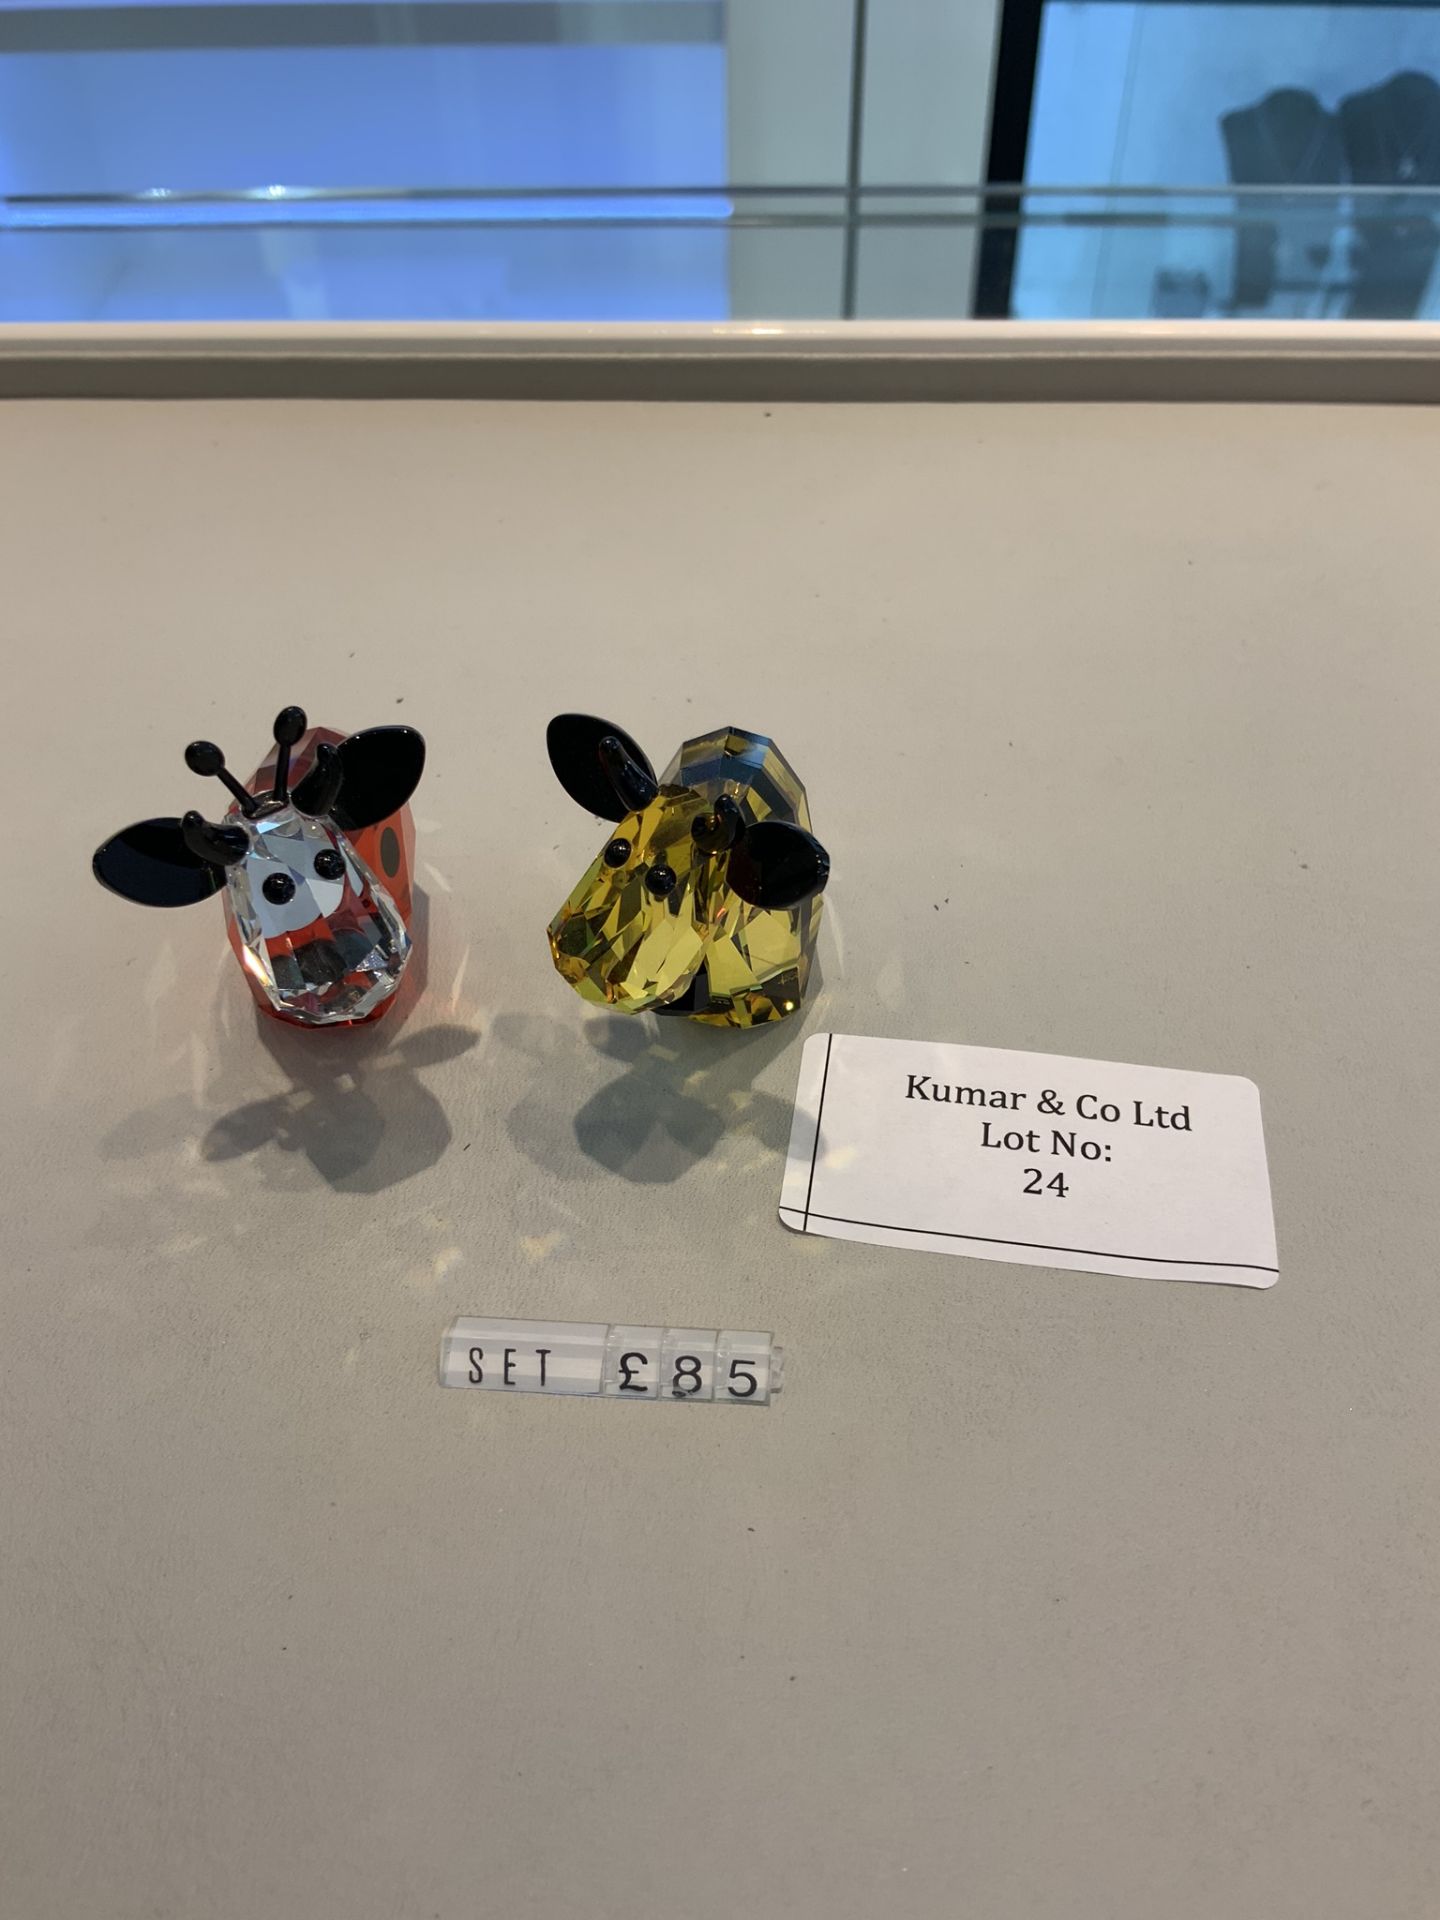 Swarovski Crystal Bumblebee Moo Limited Edition Figurines RRP £99 - Image 2 of 3